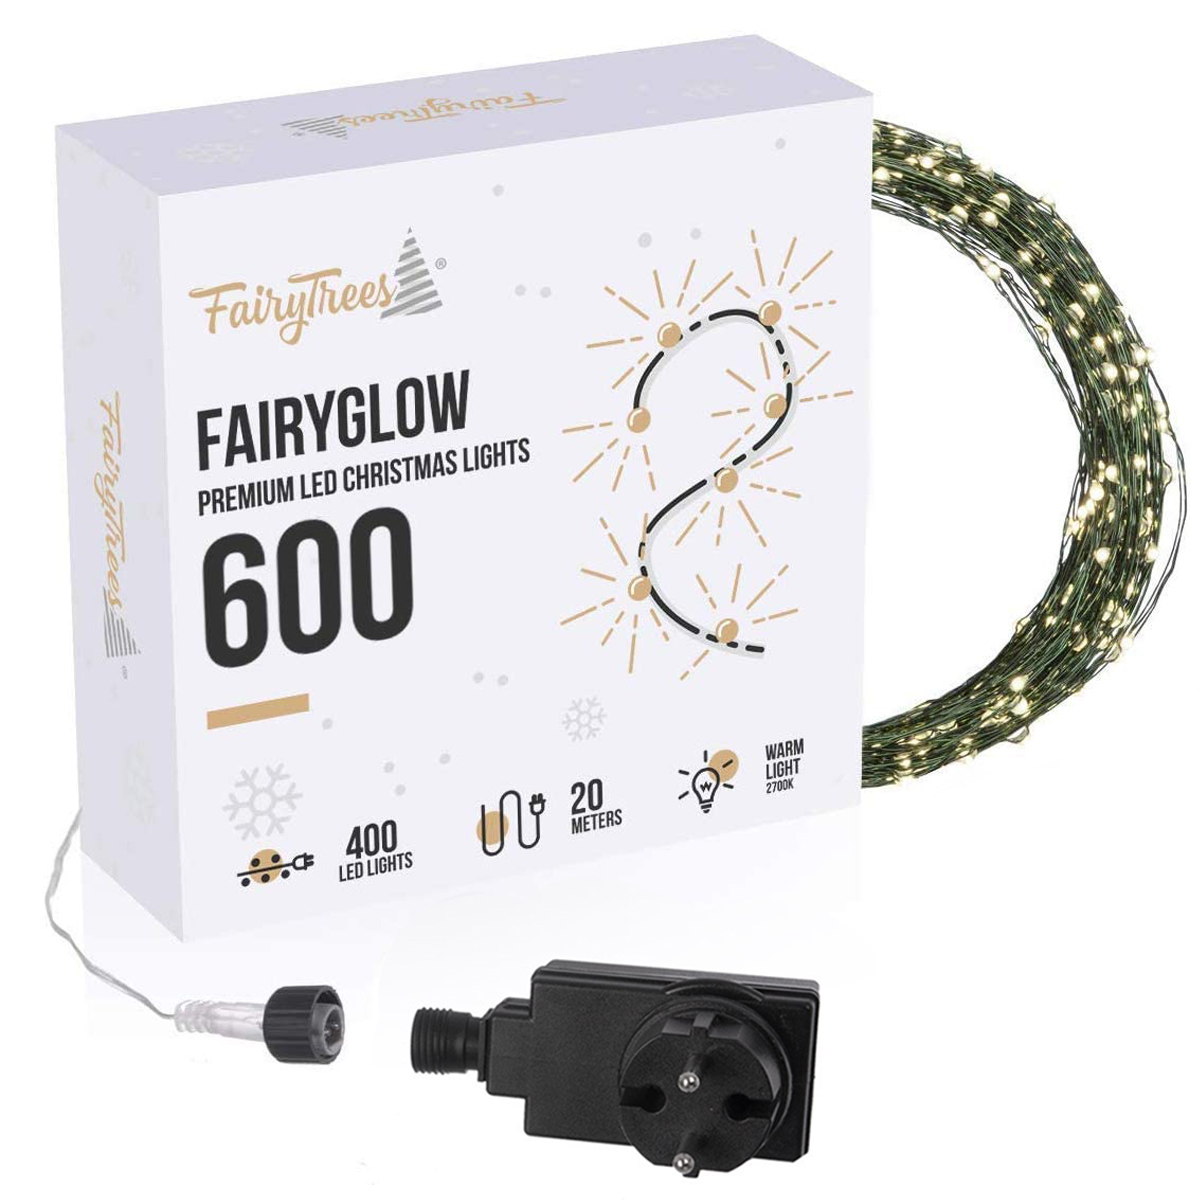 FairyGlow 600 LED Christmas tree lights